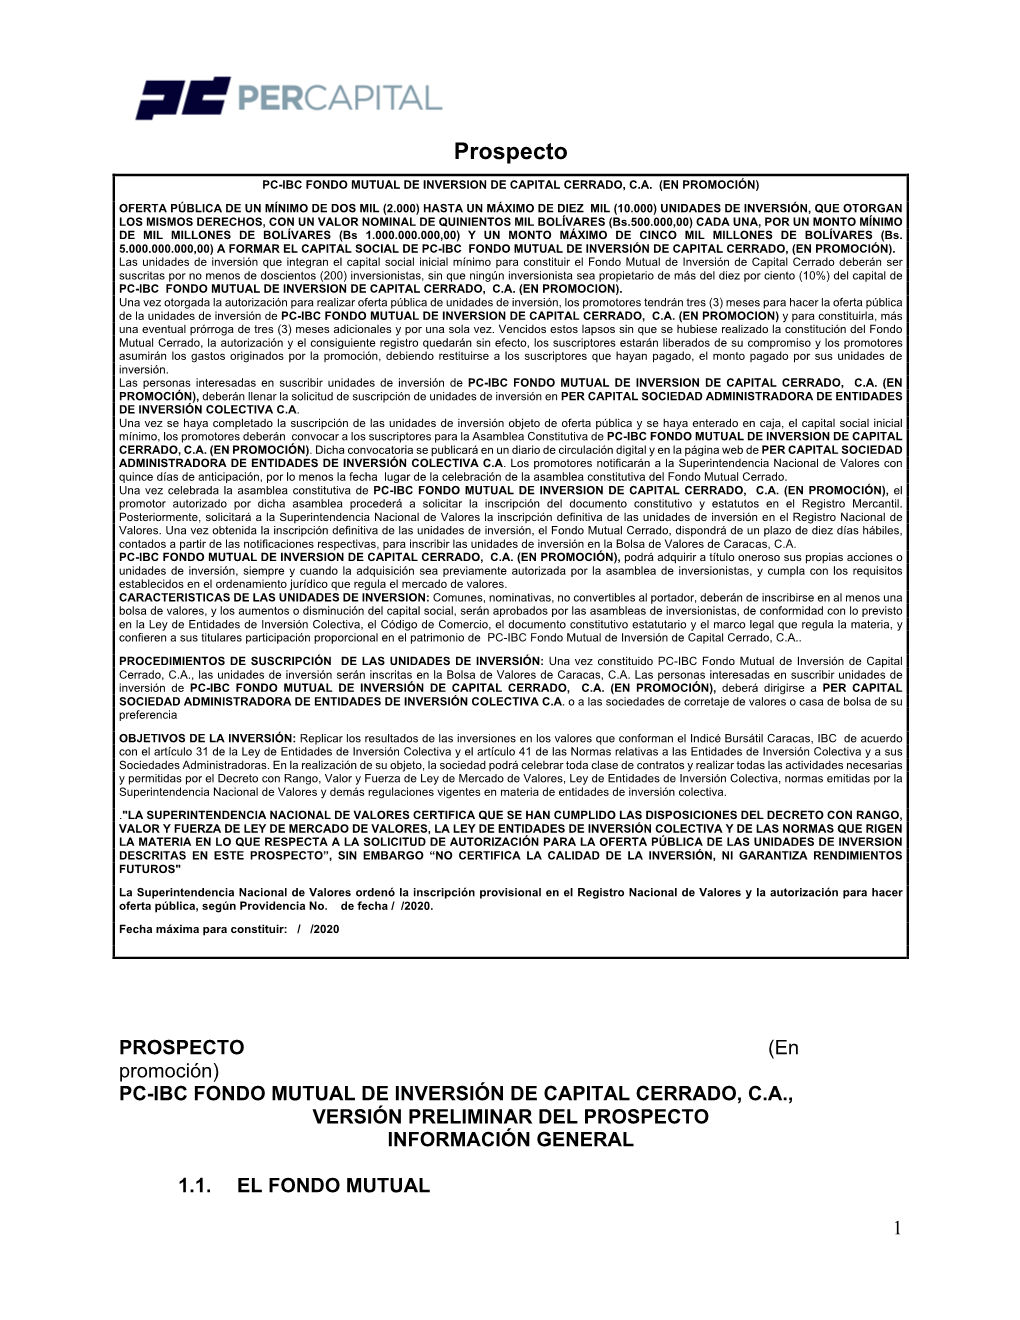 Prospecto DO C.A PC-IBC FONDO MUTUAL DE INVERSION DE CAPITAL CERRADO, C.A